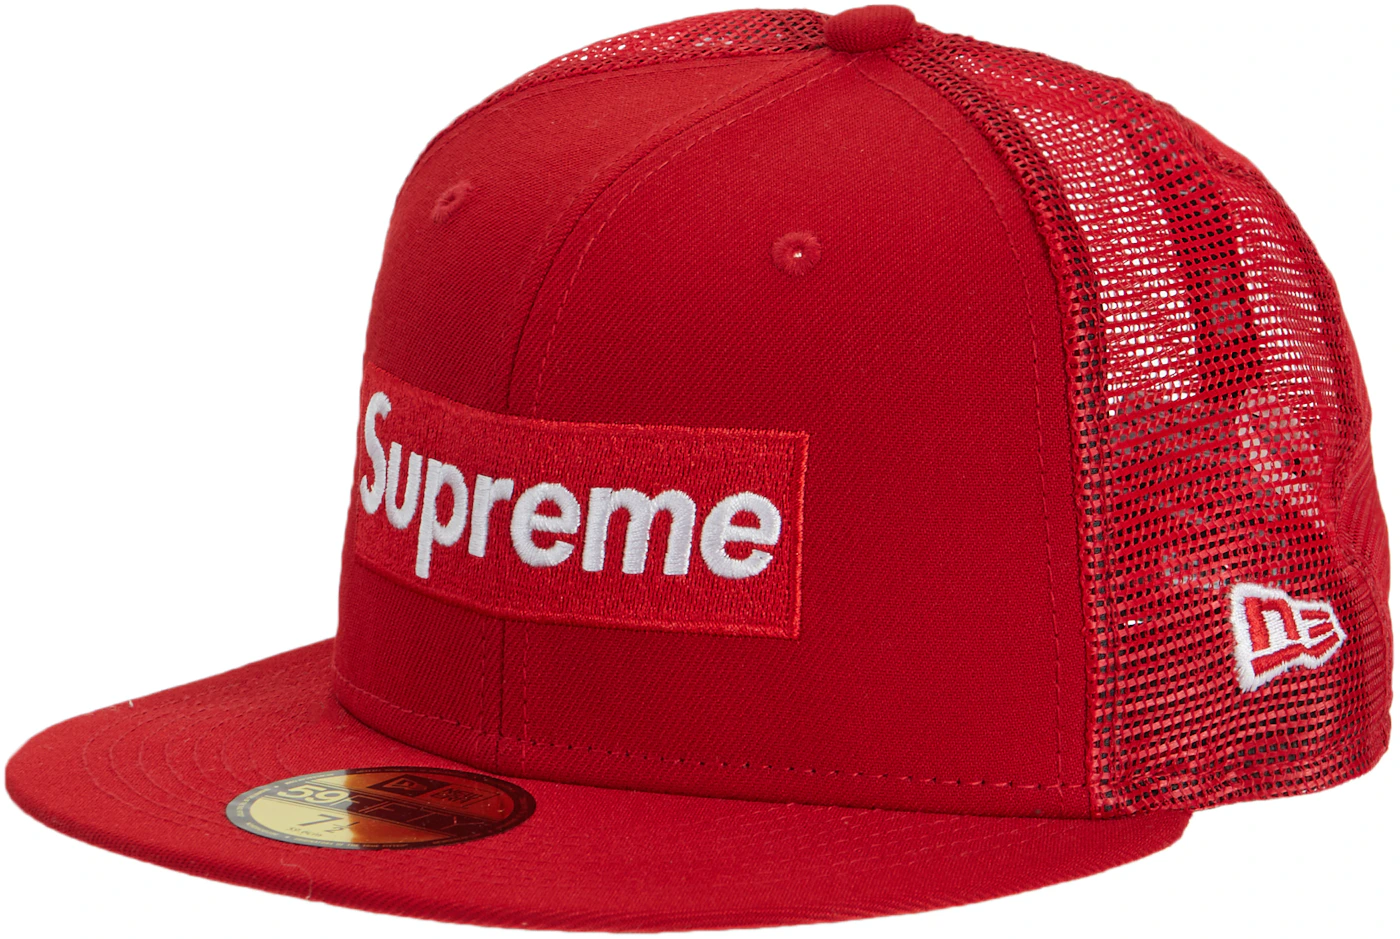 NEW Supreme S/S 2012 New Era Denim Red Box Logo Hat Size 7 3/8 100%  Authentic